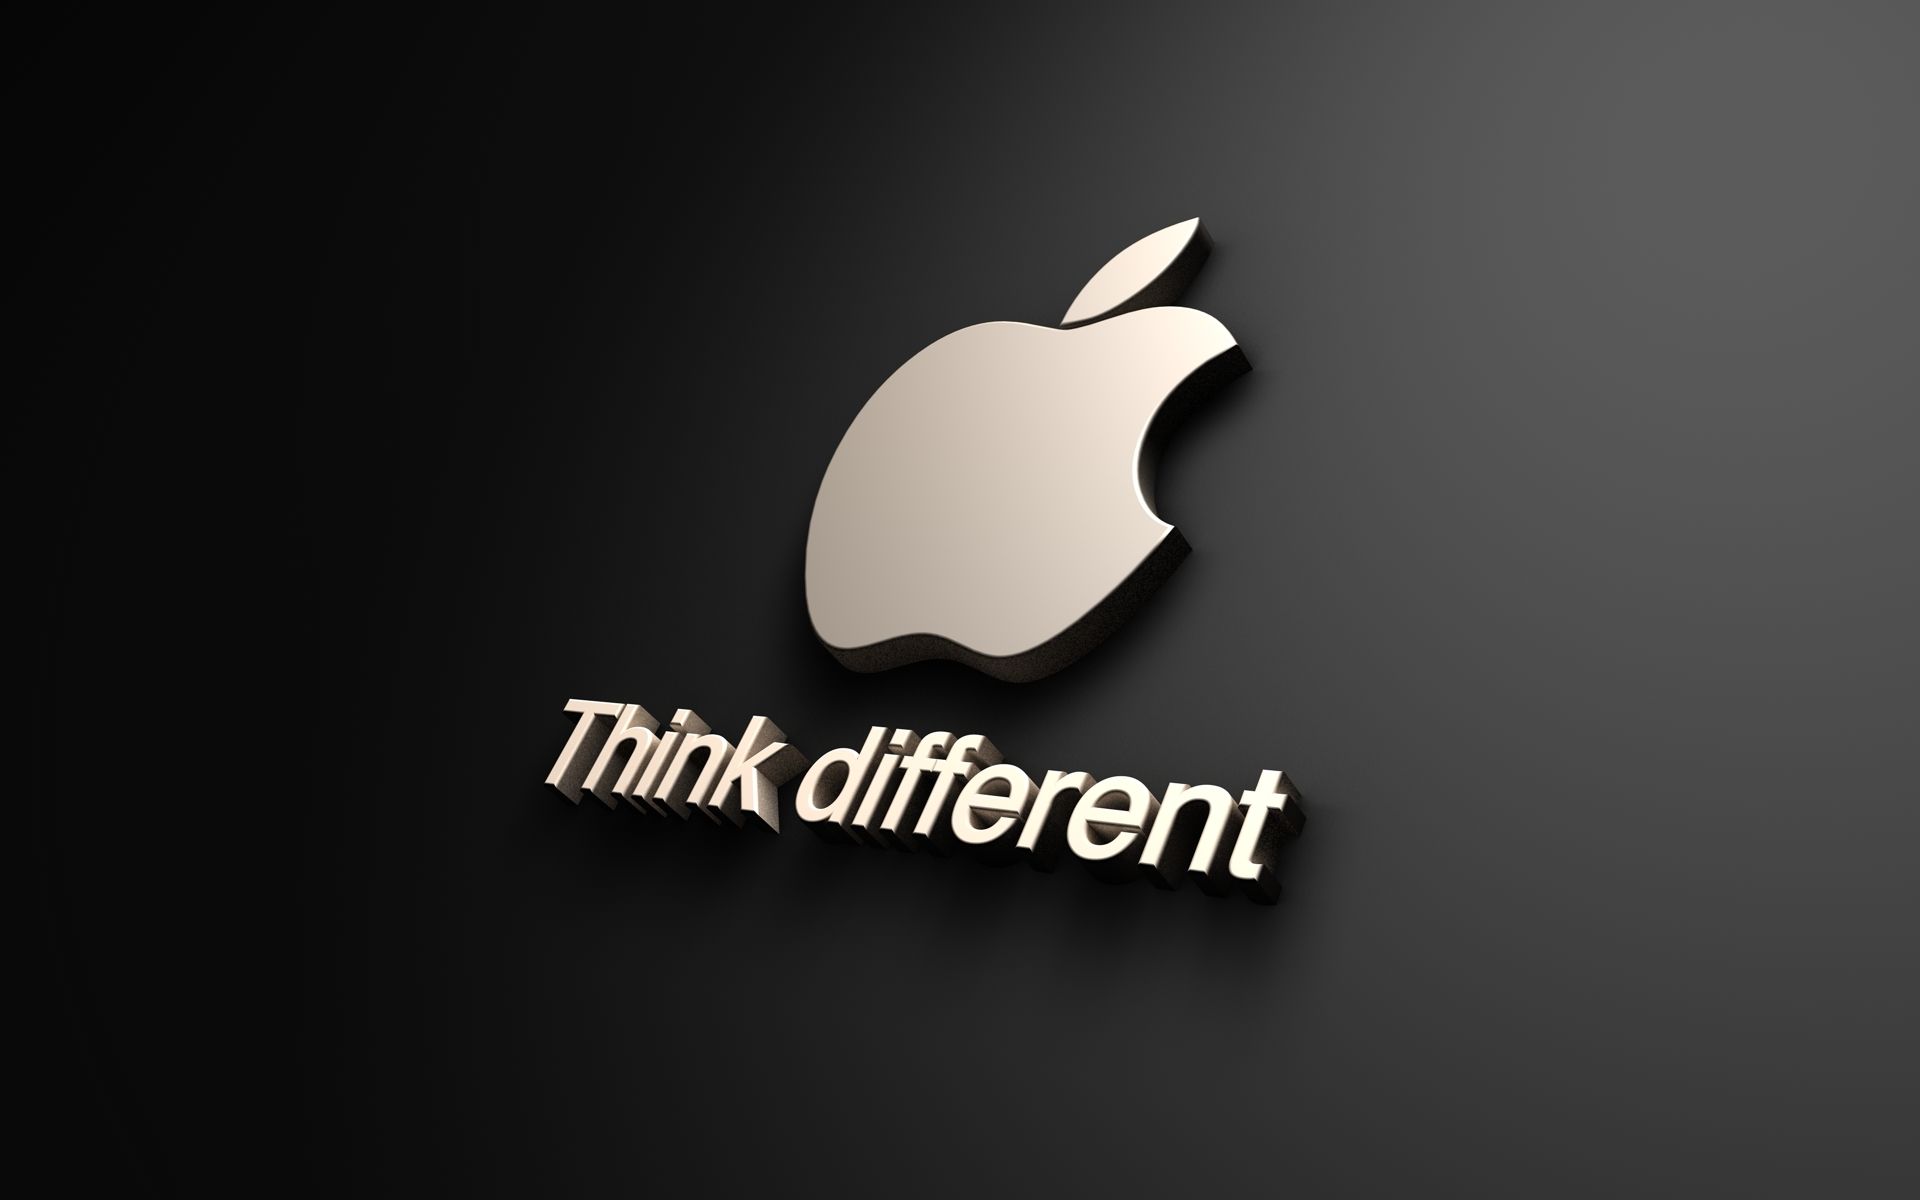 of apple 4K wallpaper for your desktop or mobile screen